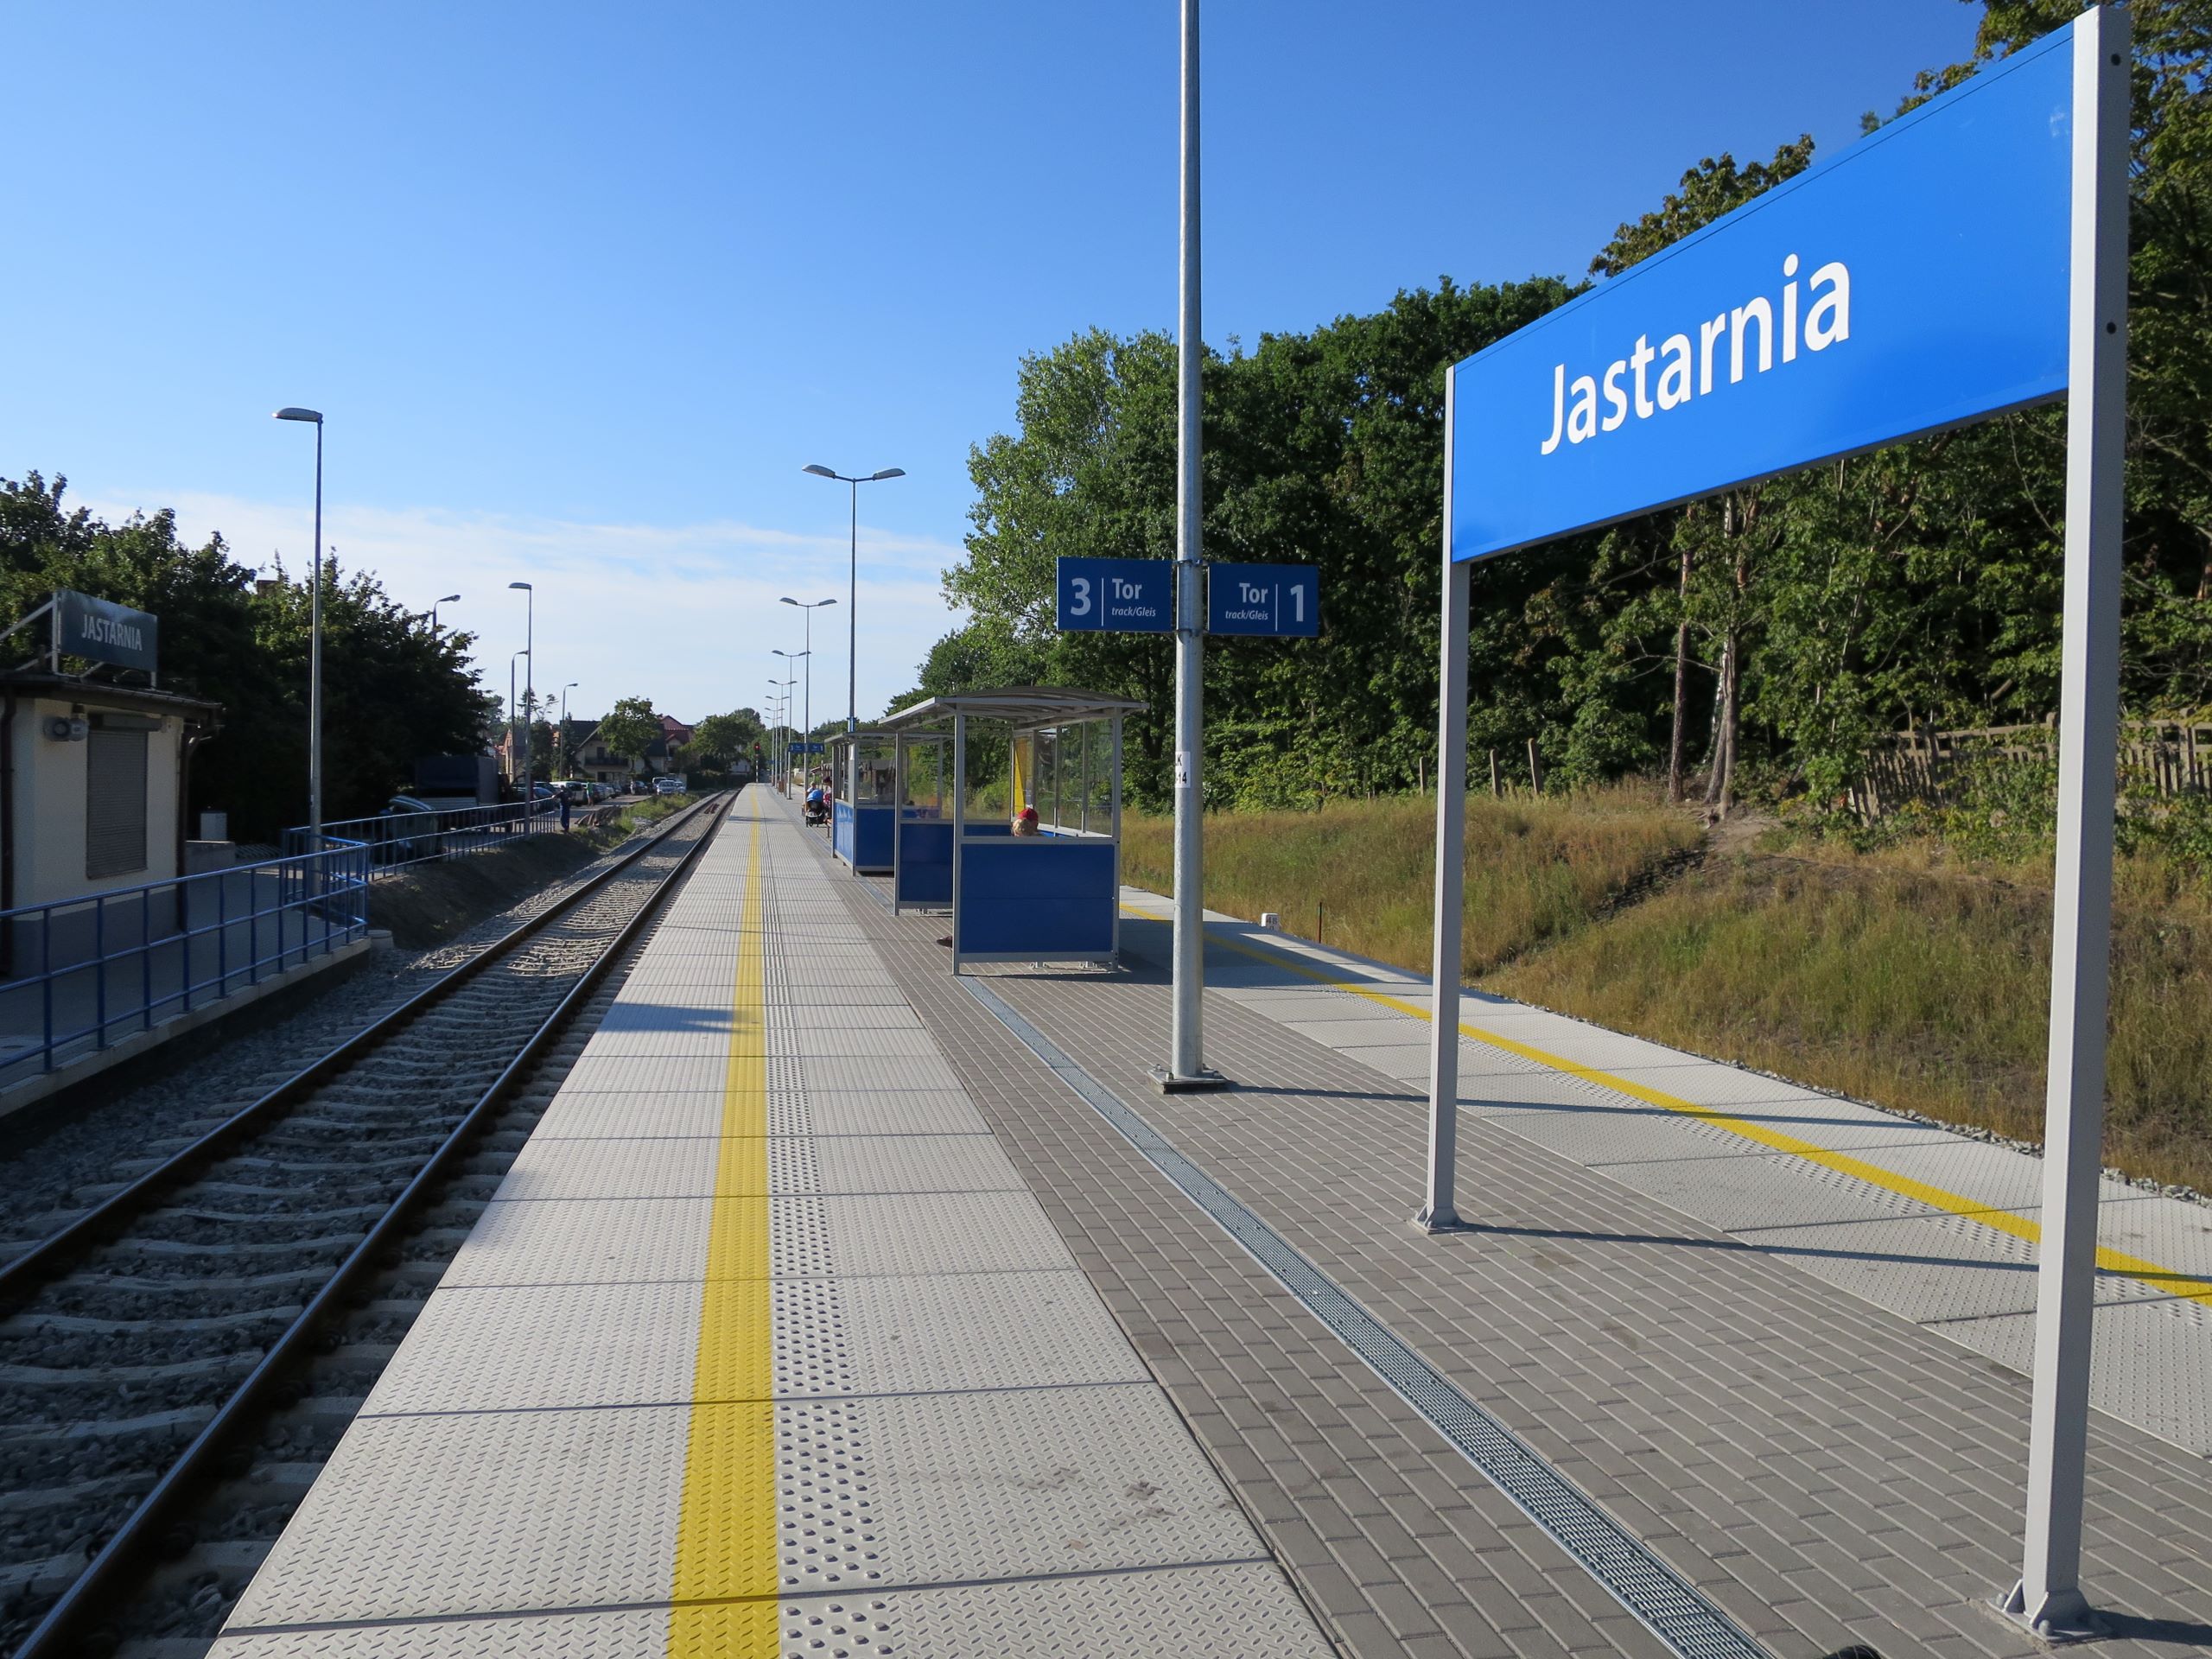 Sat-System’s Contribution to the Modernization and Upgrading of Jastarnia Station